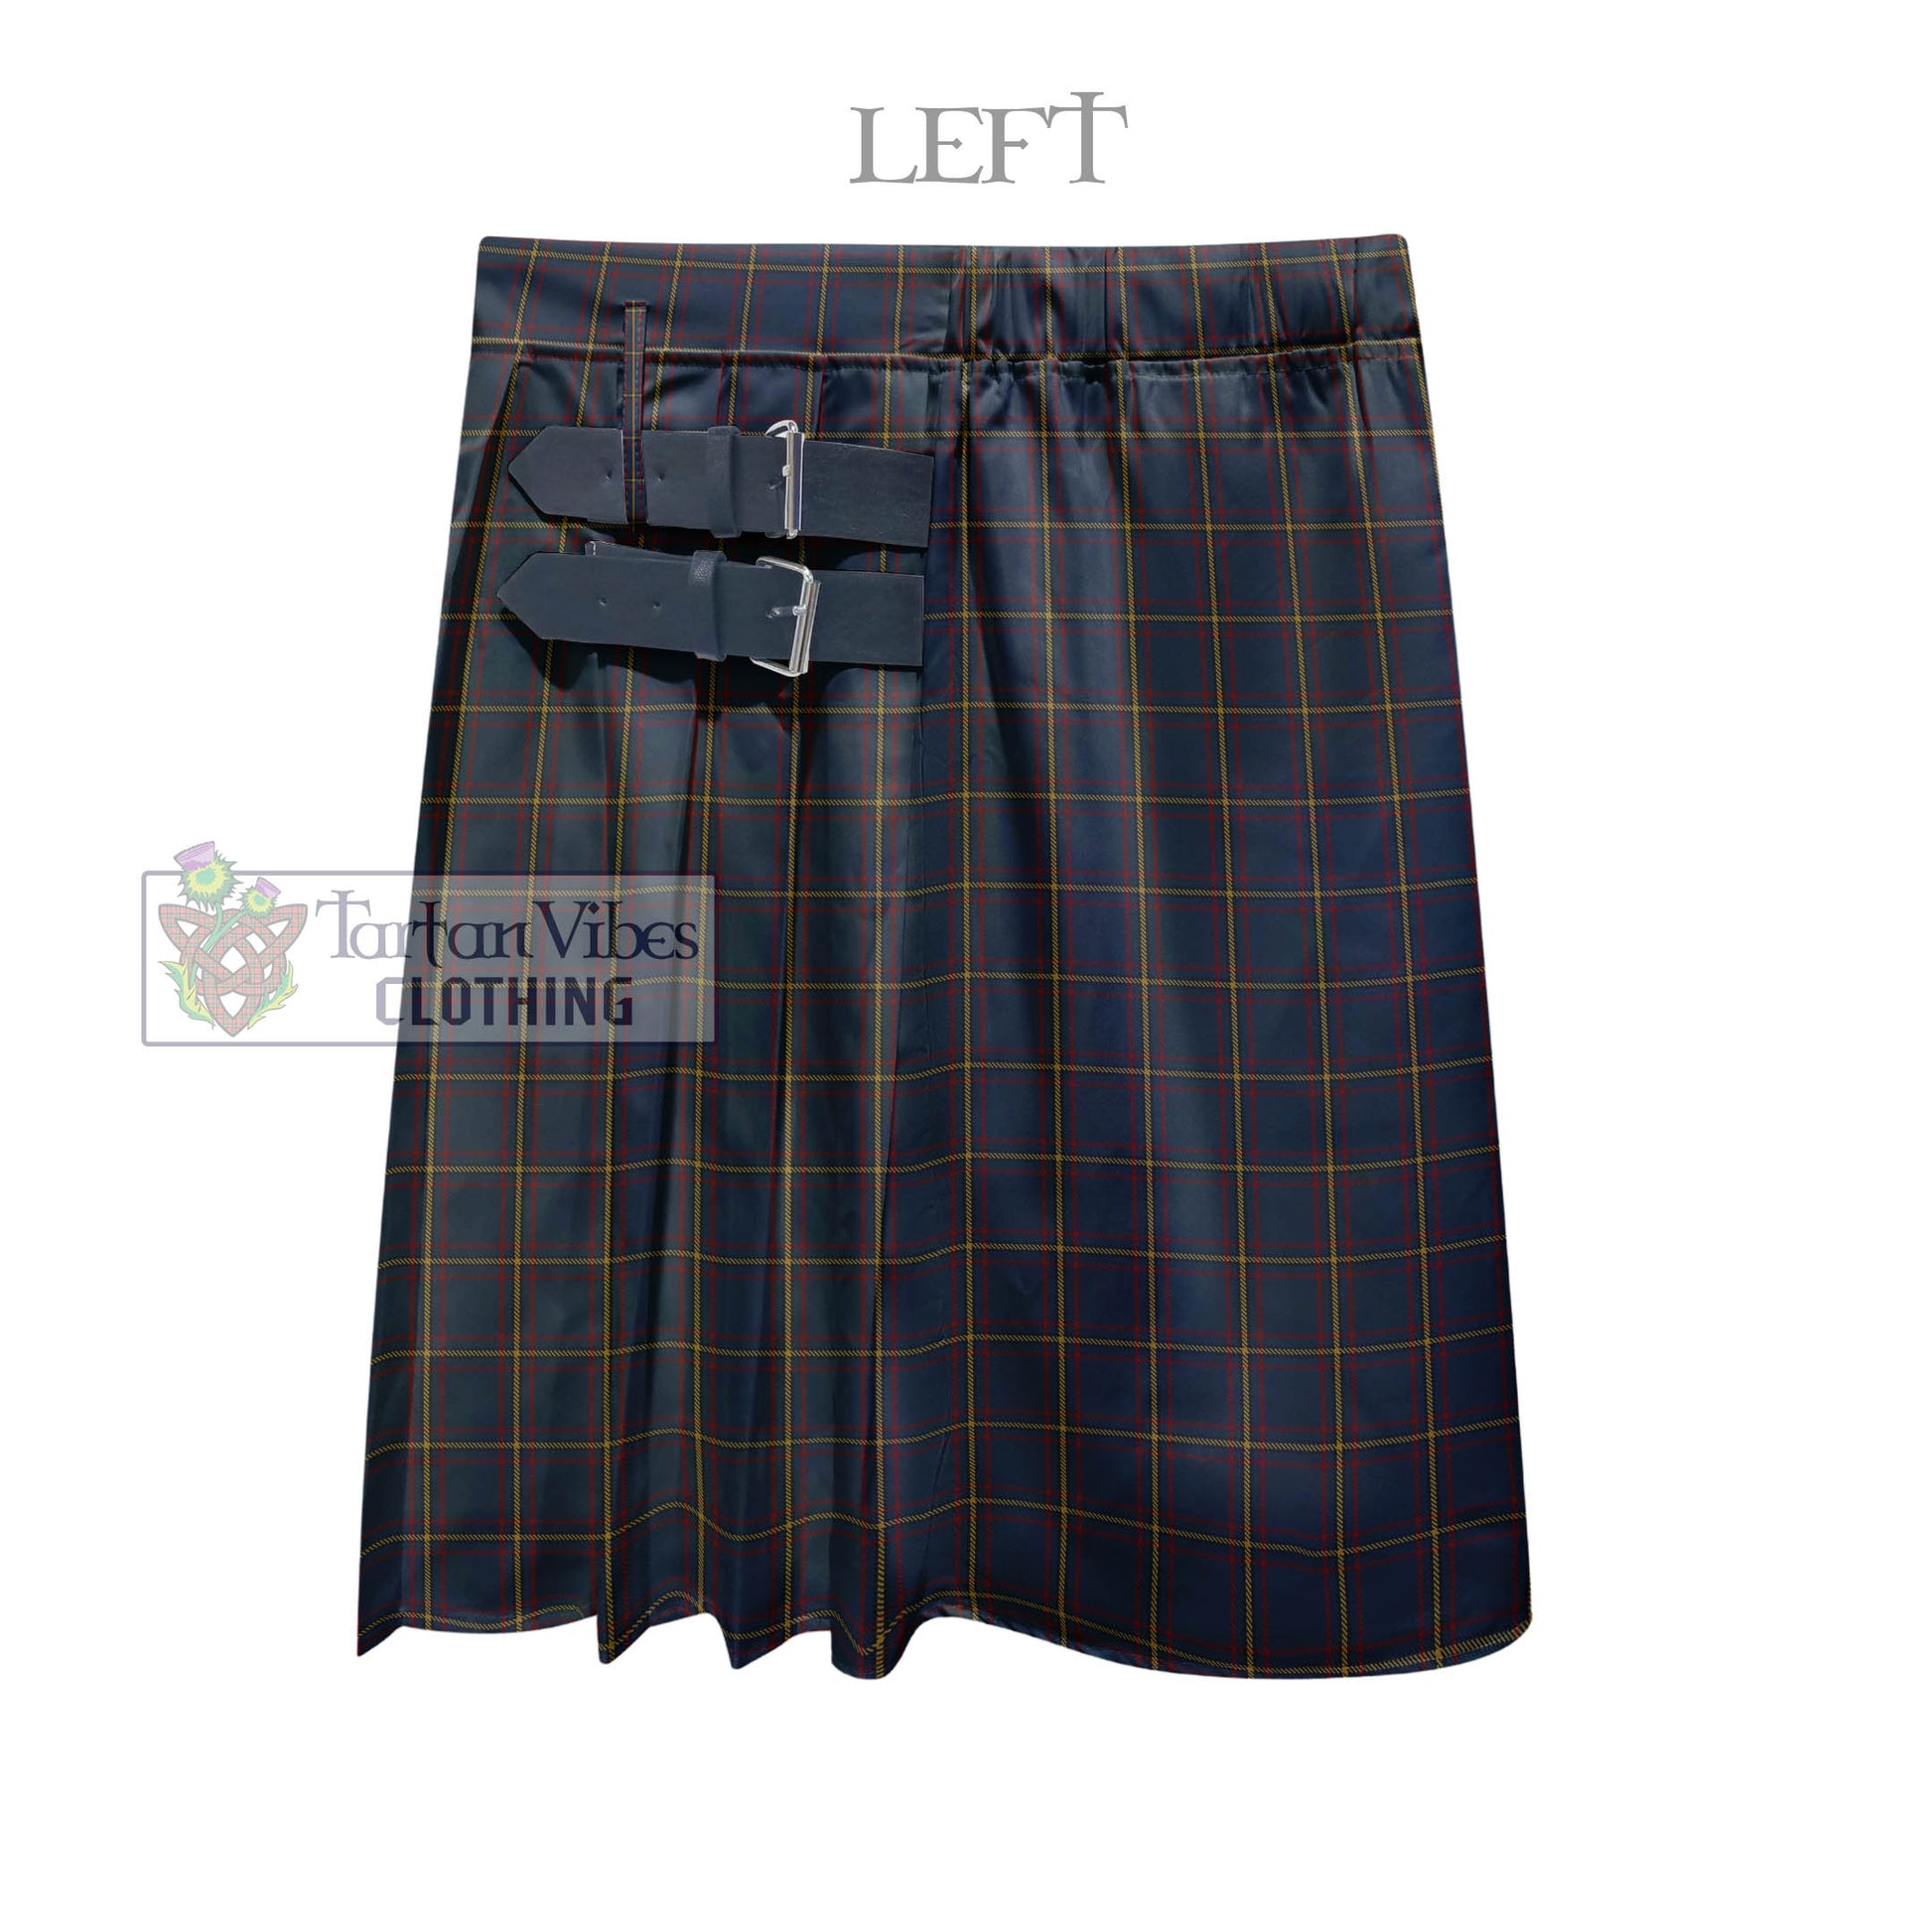 Tartan Vibes Clothing MacLaine of Lochbuie Hunting Tartan Men's Pleated Skirt - Fashion Casual Retro Scottish Style